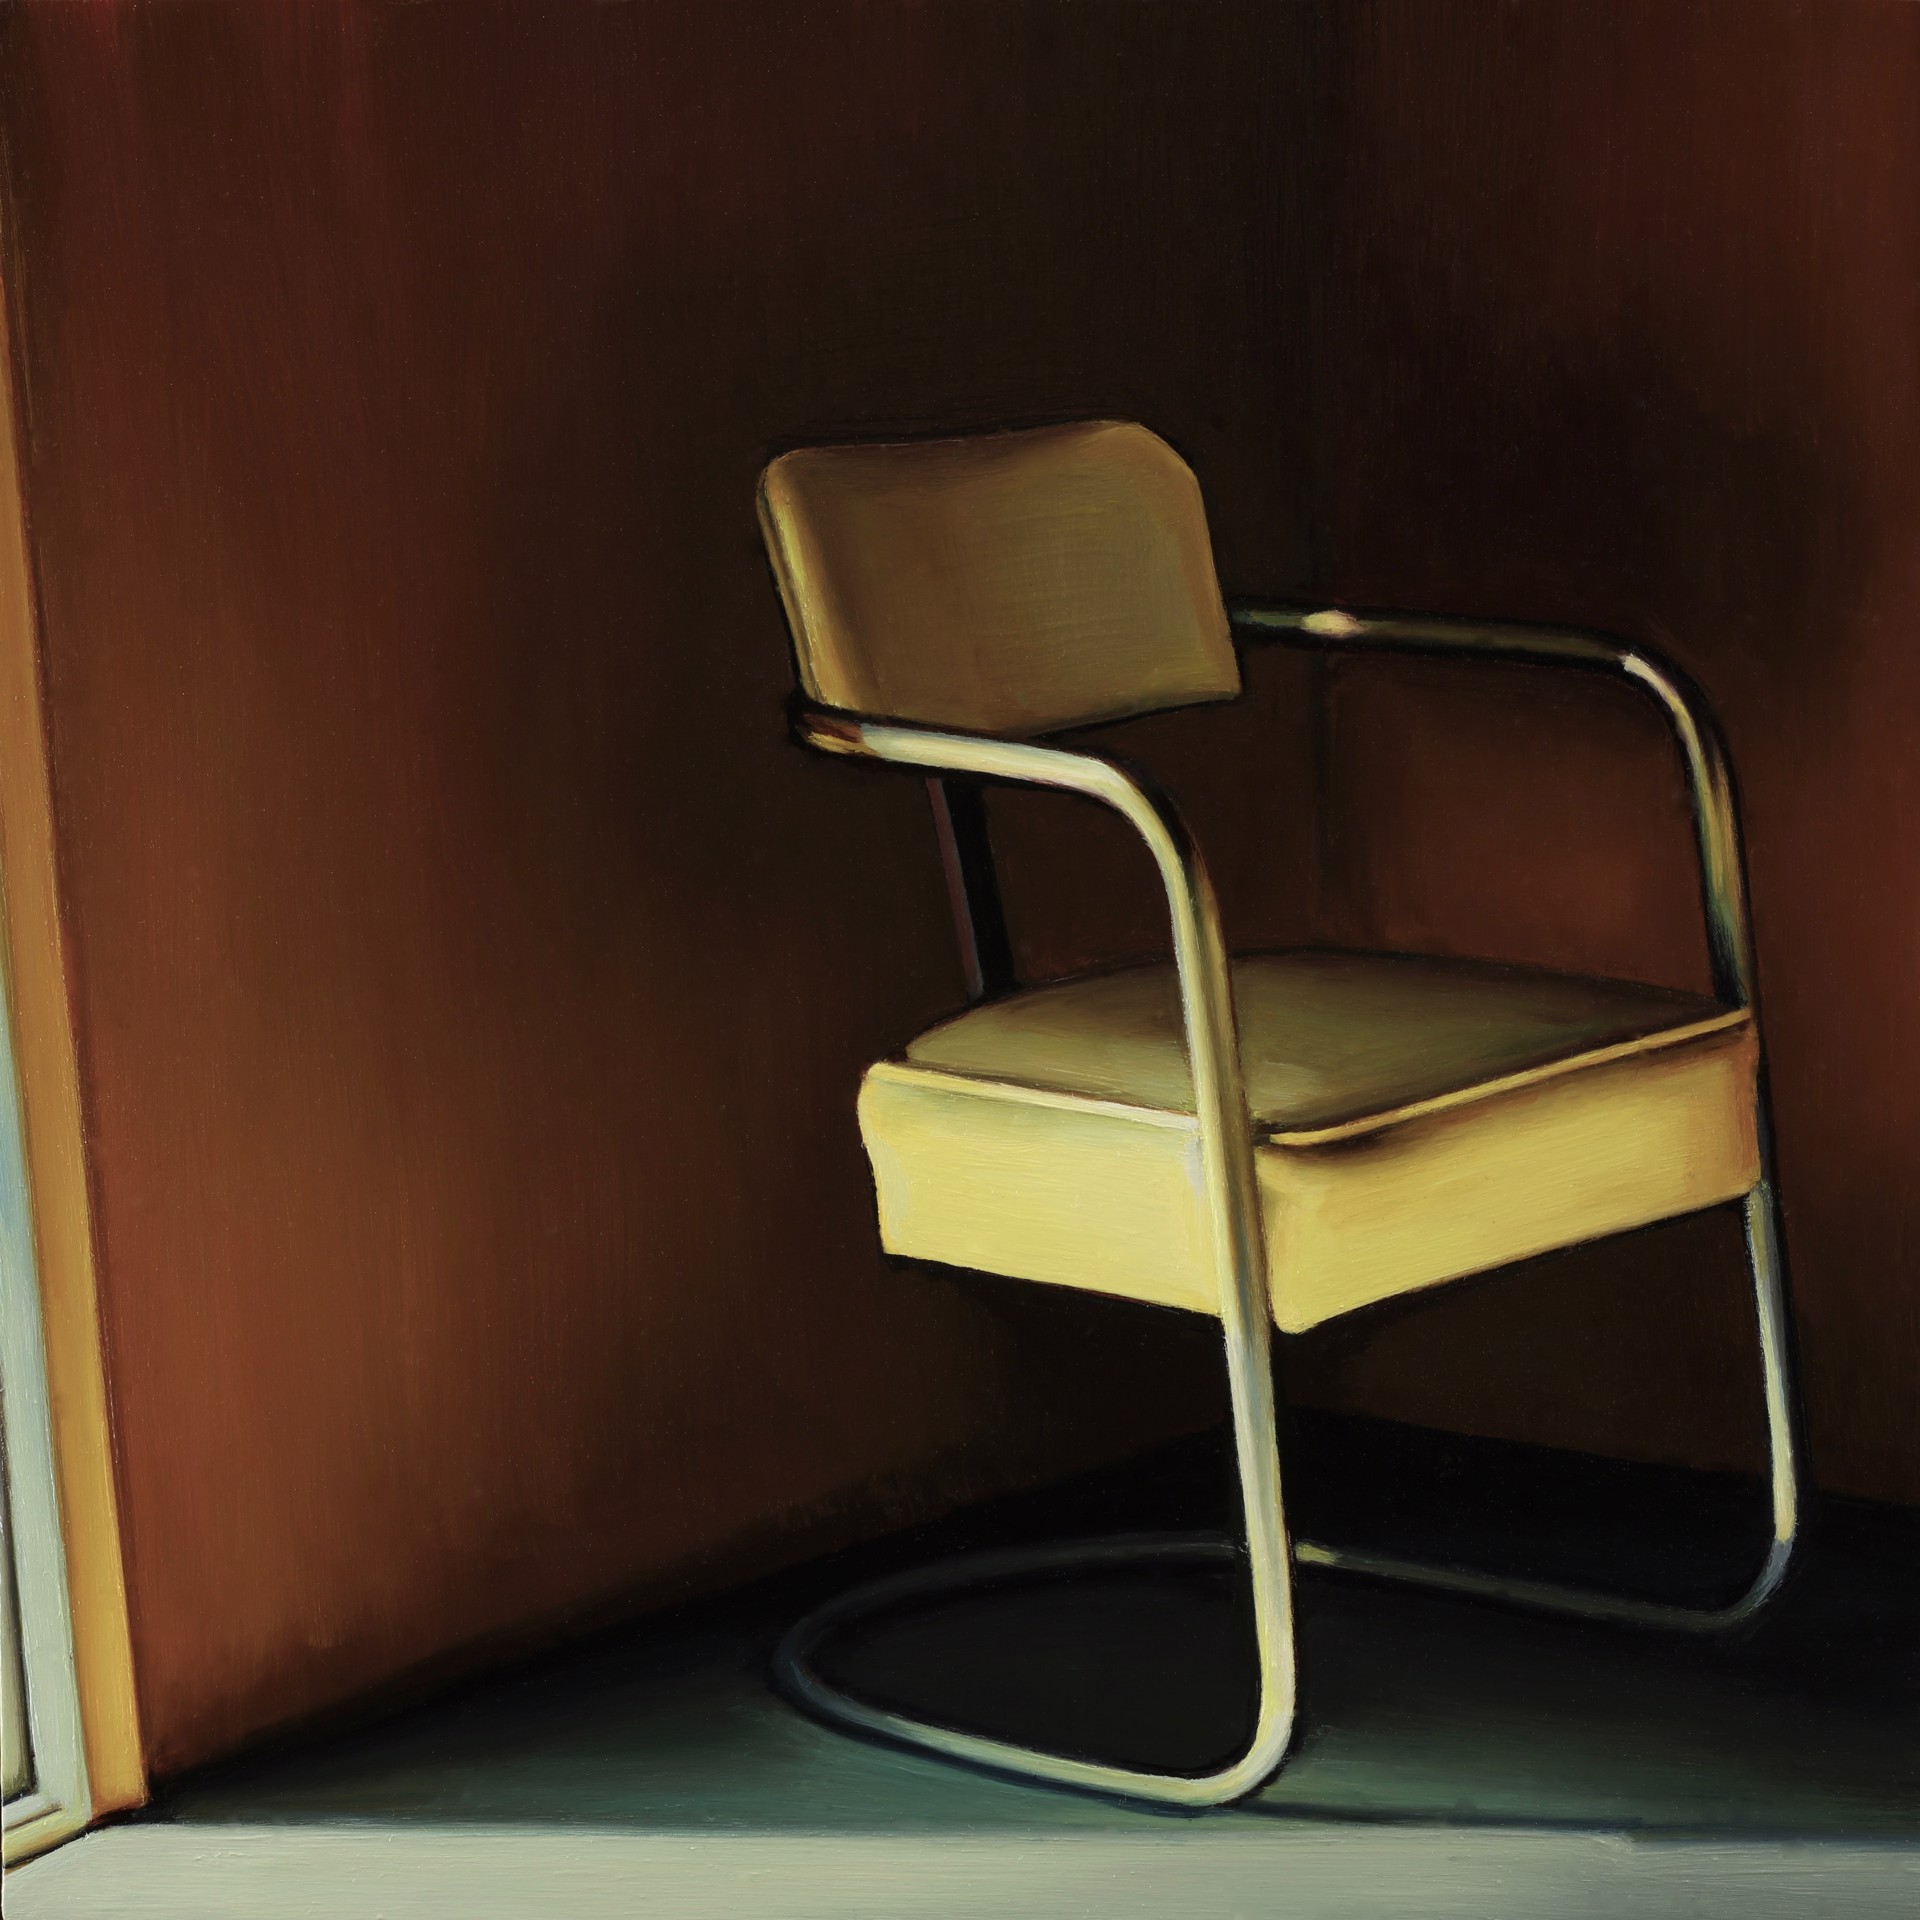 Canyon Chair #9 by Ada Sadler